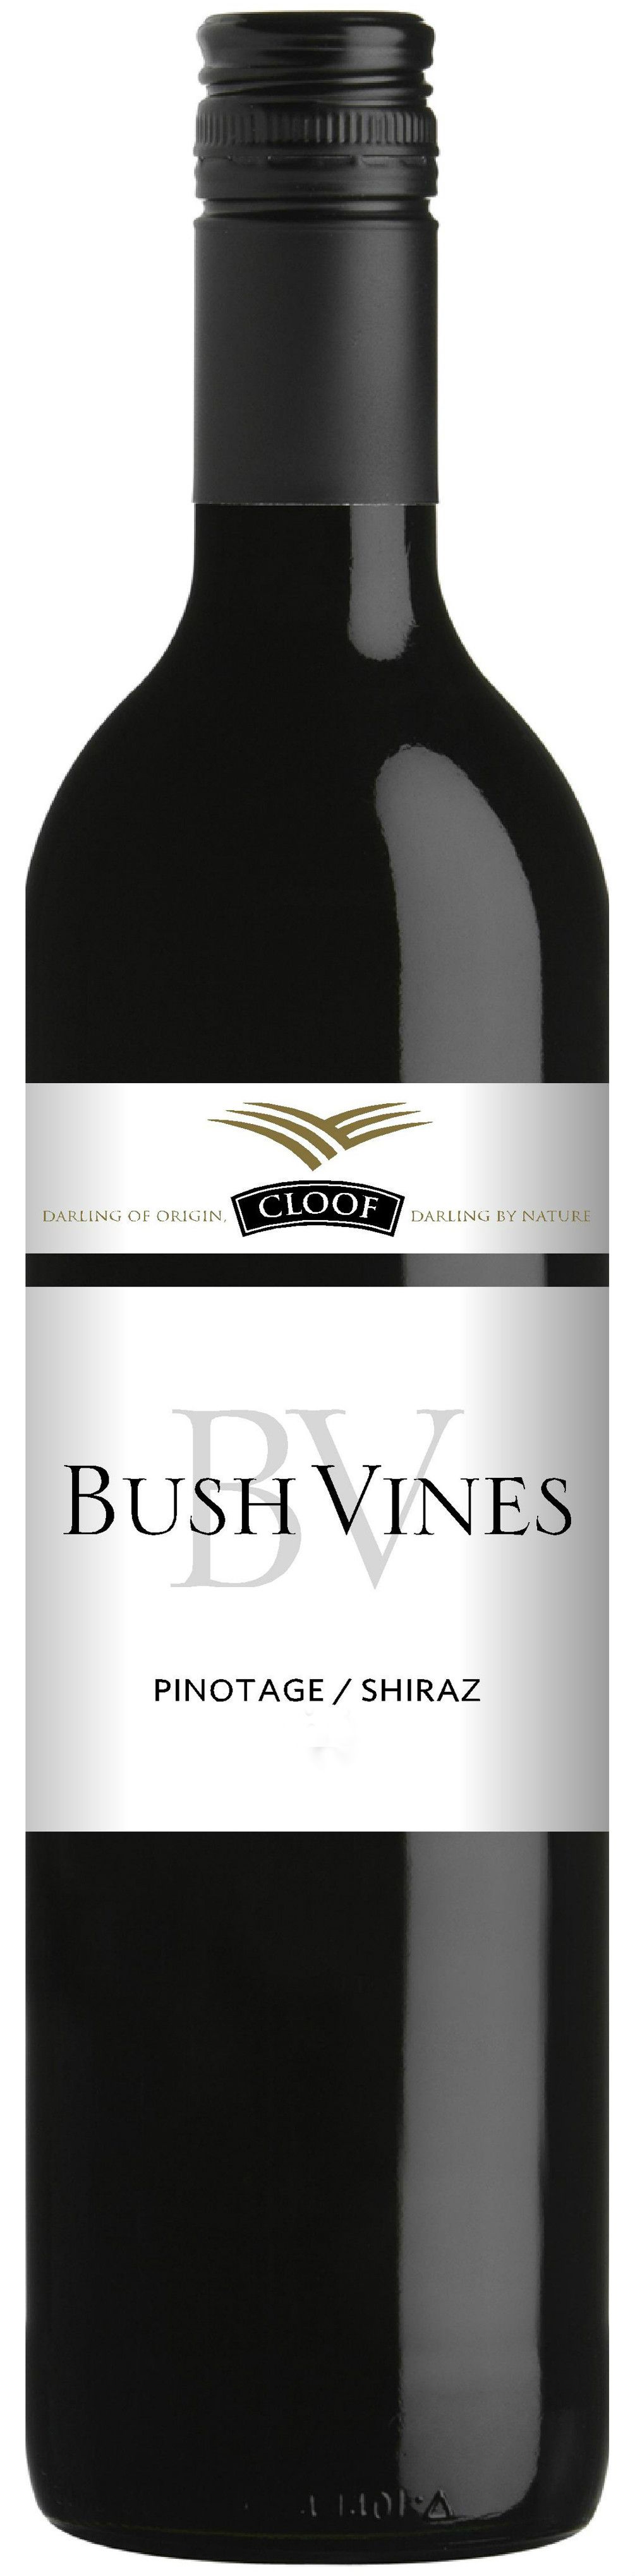 Cloof, Bush Vines Pinotage Shiraz, 2017